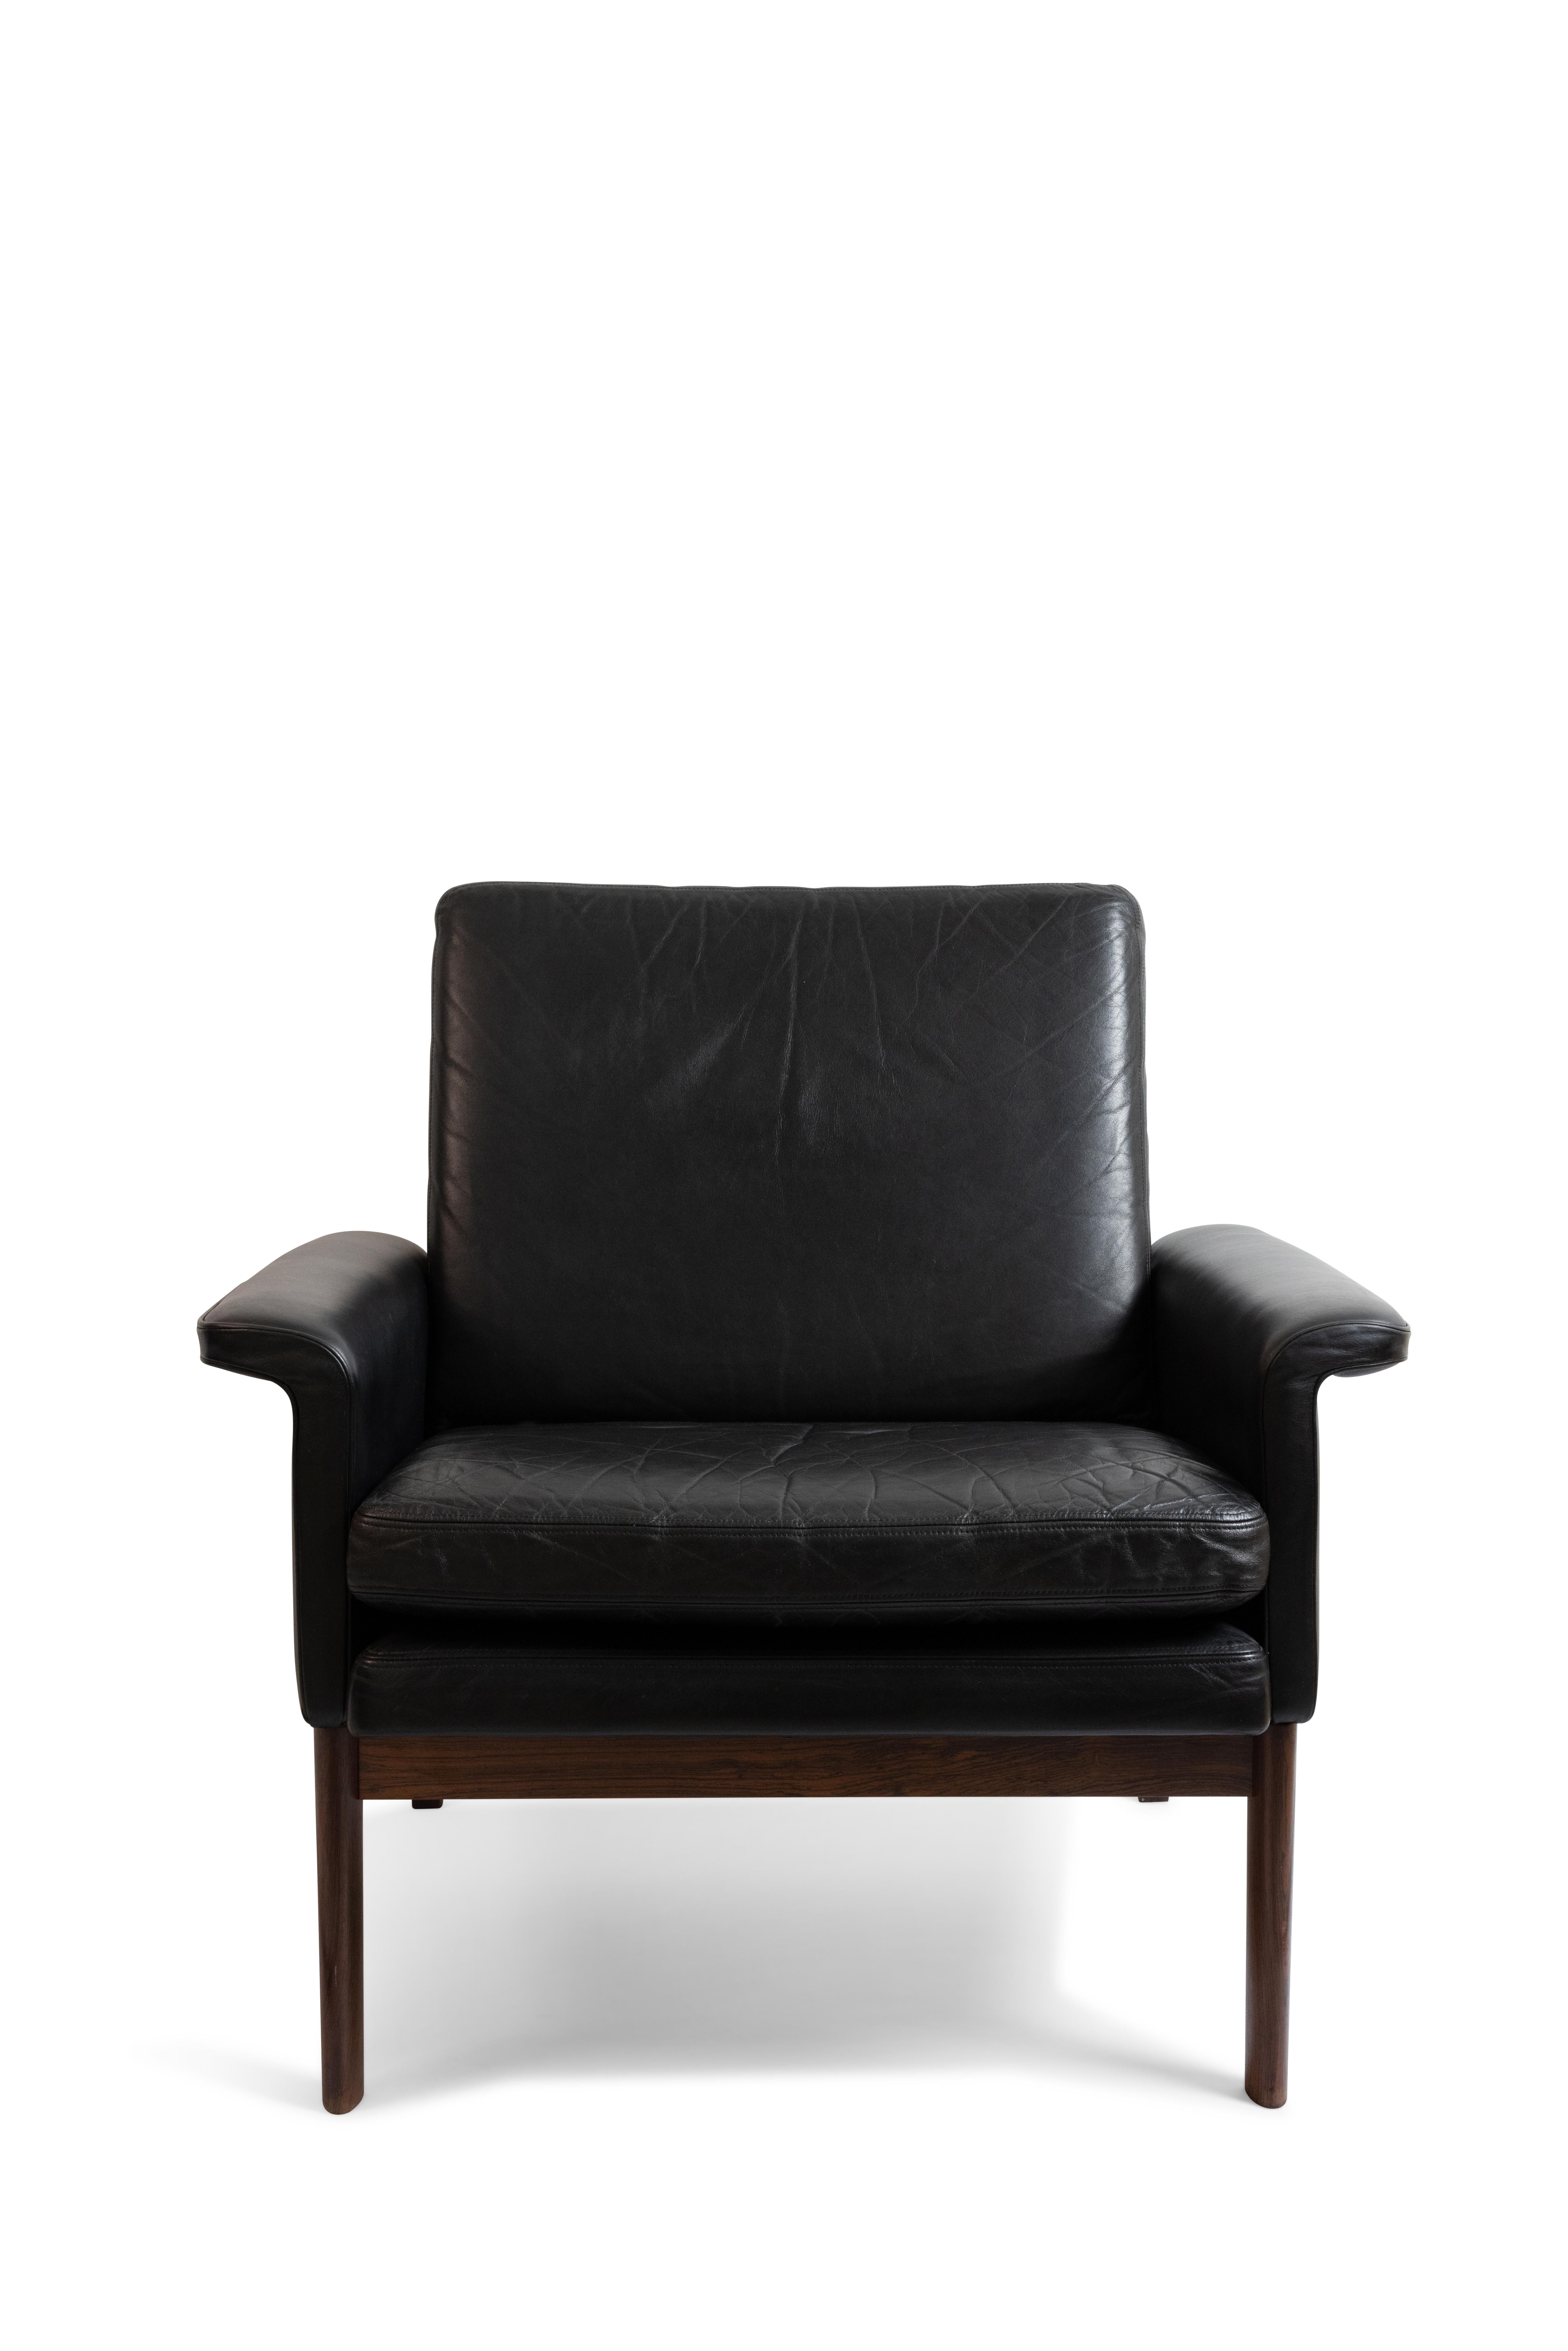 Finn Juhl Dreisitzer-Sofa mit schwarzem Original-Leder, Modell 218/3, Dänemark im Angebot 2